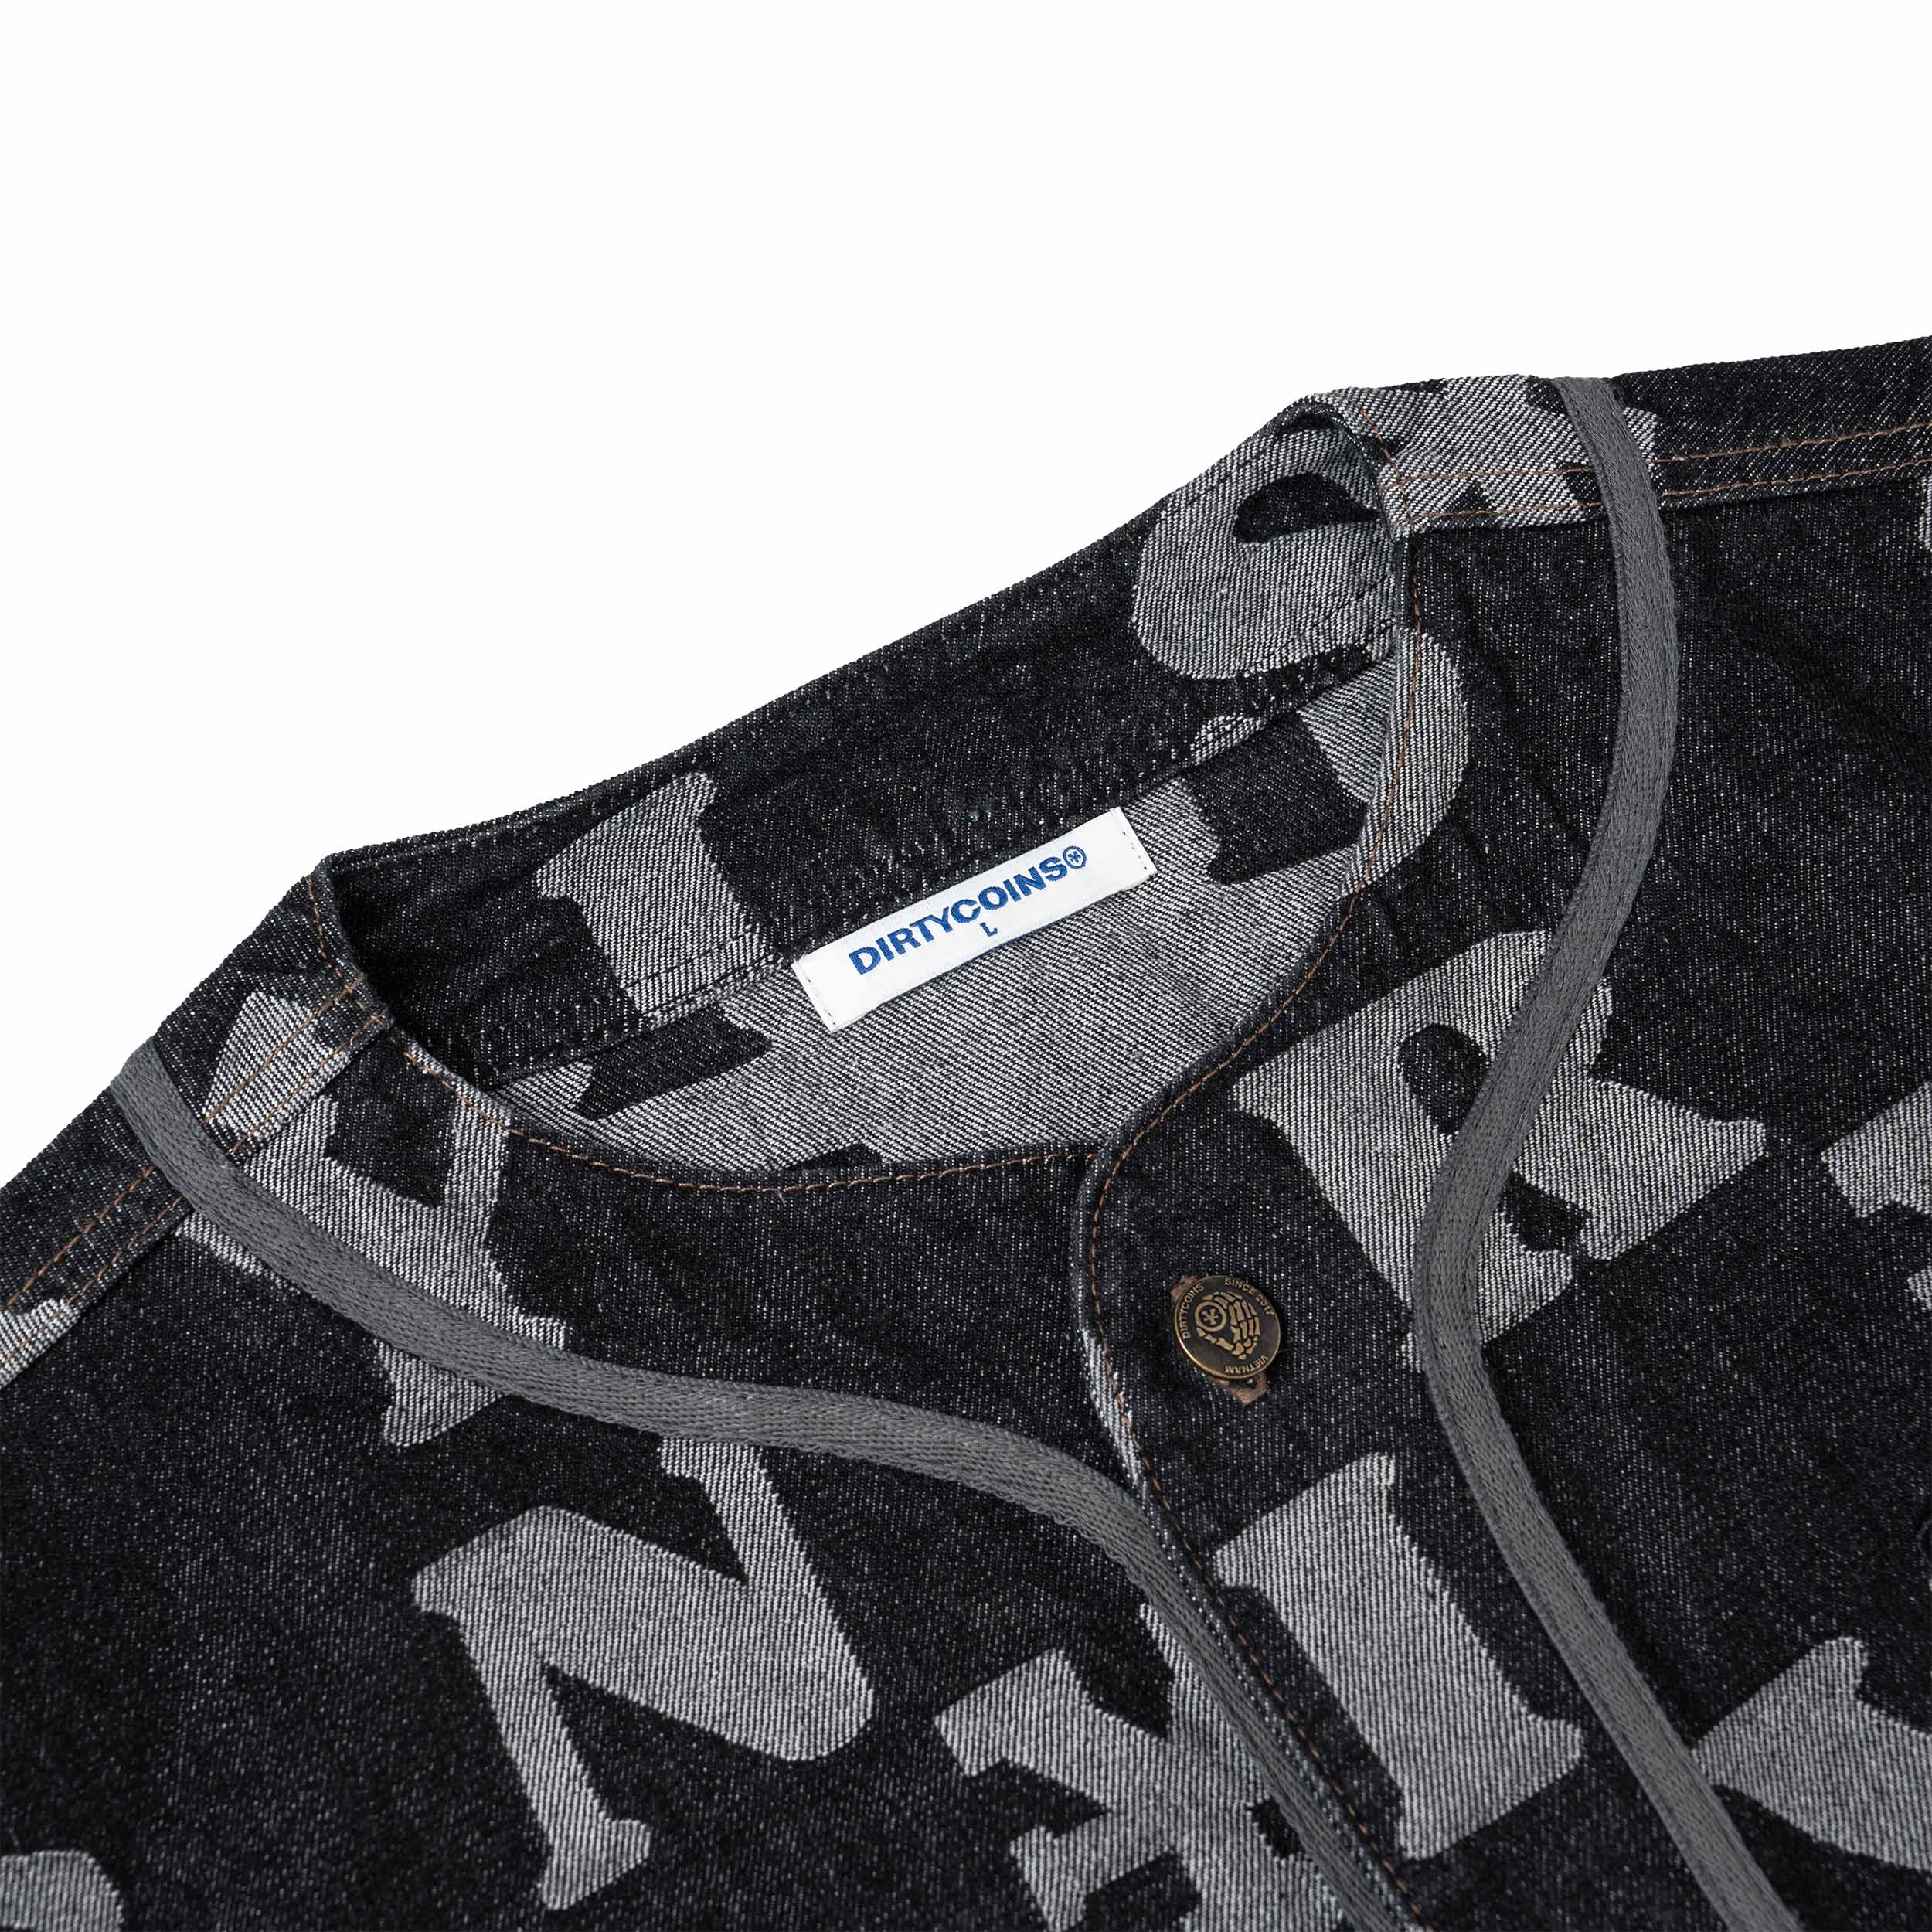 Áo Thun DiryCoins Letters Monogram Denim Jersey Shirt - Black